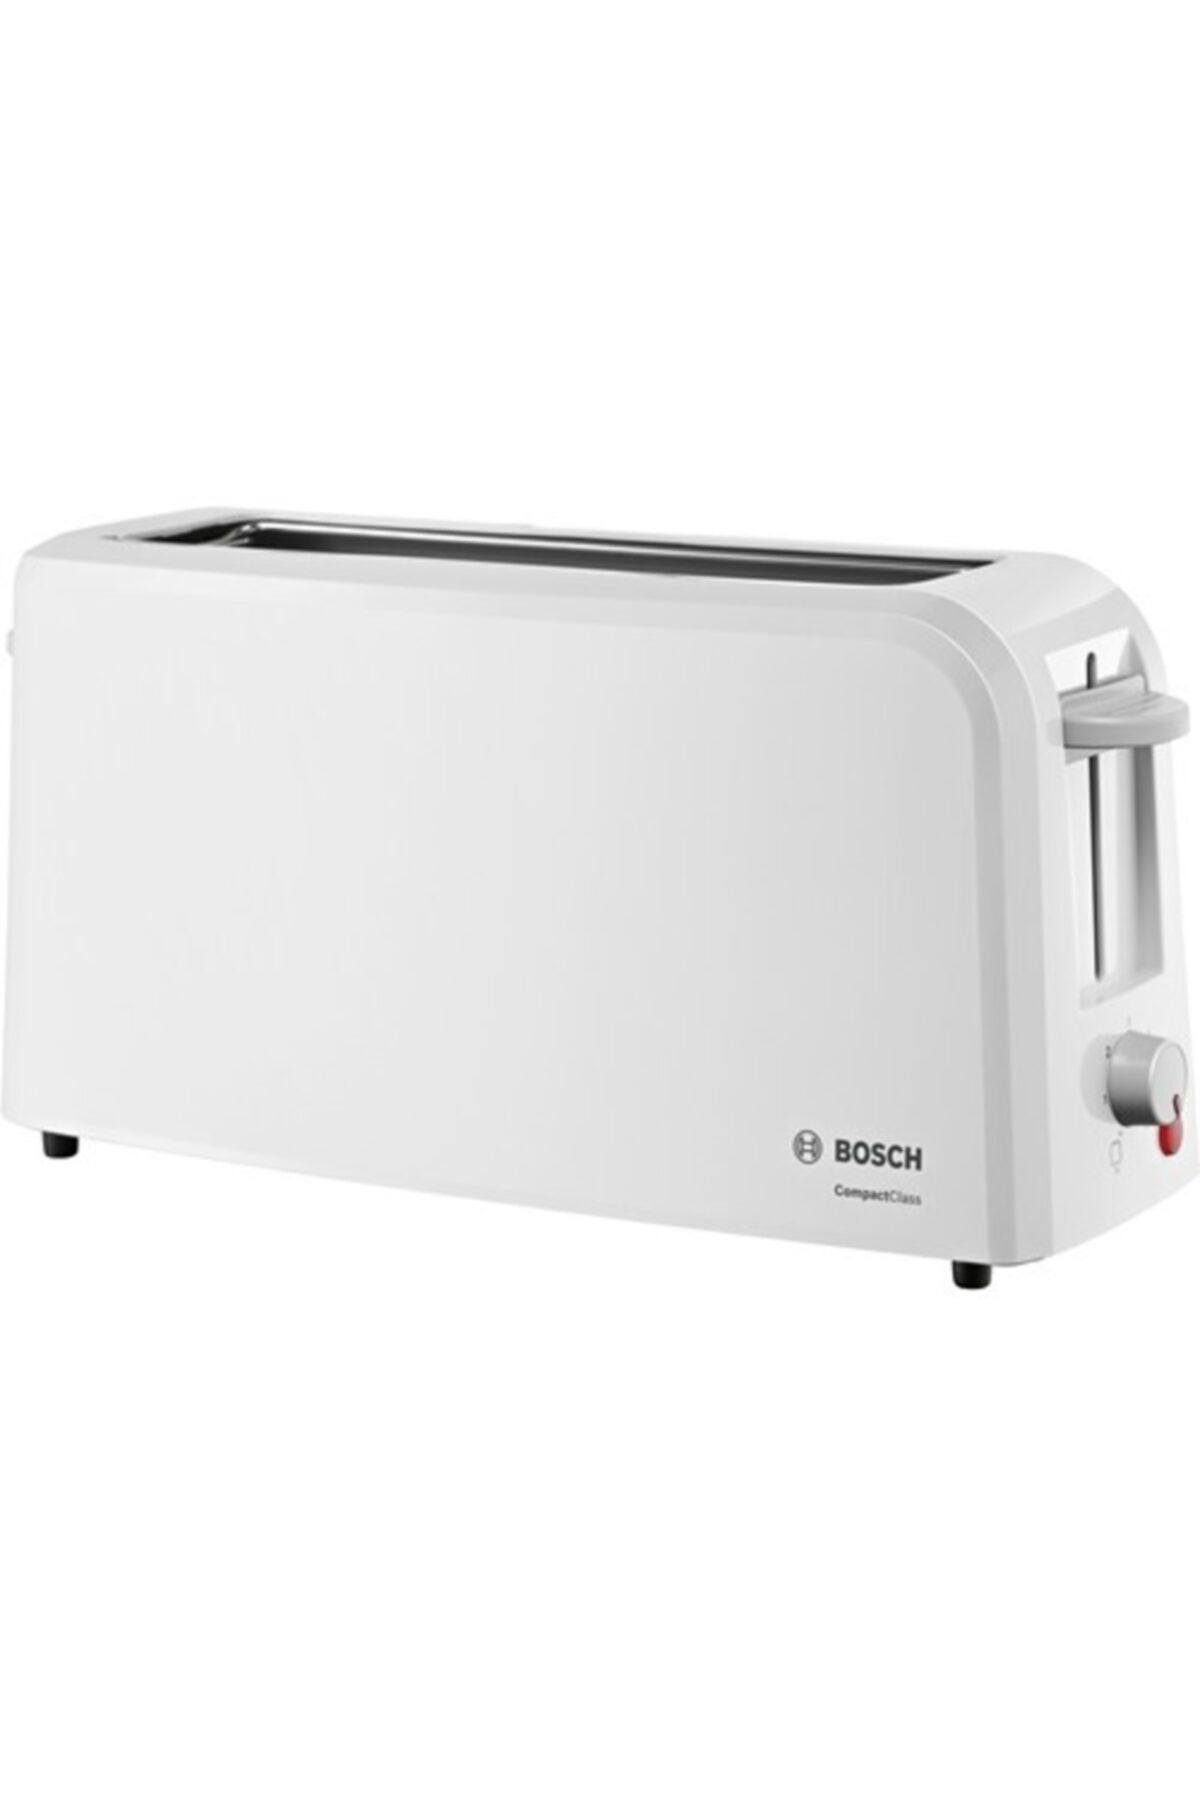 Bosch Tat3a001 Ekmek Kızartma Makinesi